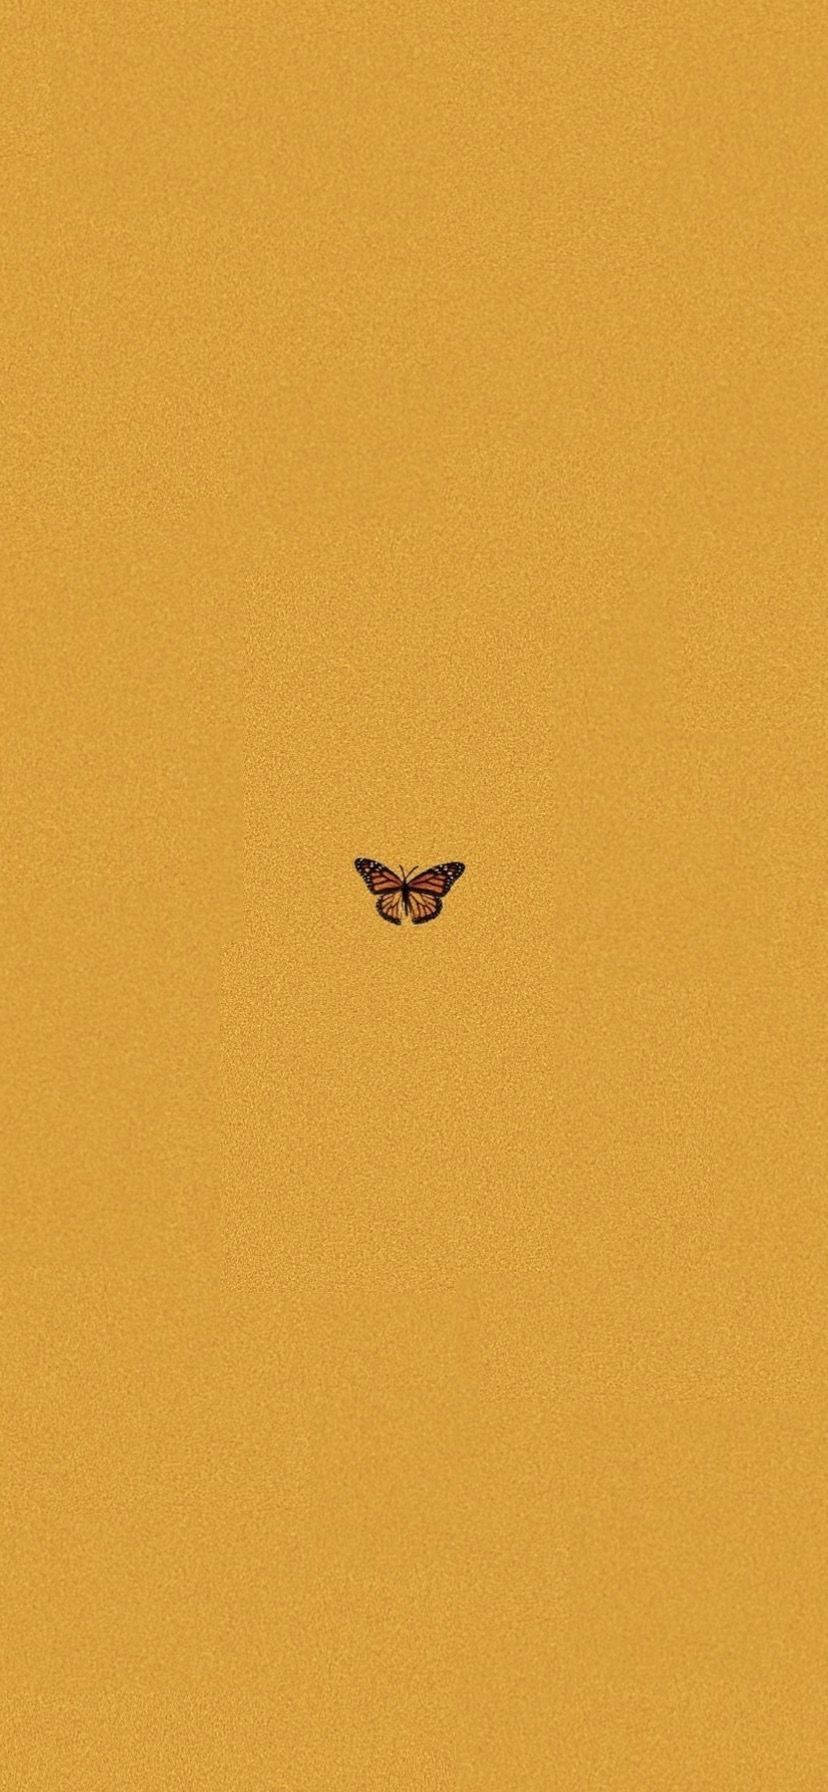 Butterfly Aesthetic Yellow Mustard Wallpaper